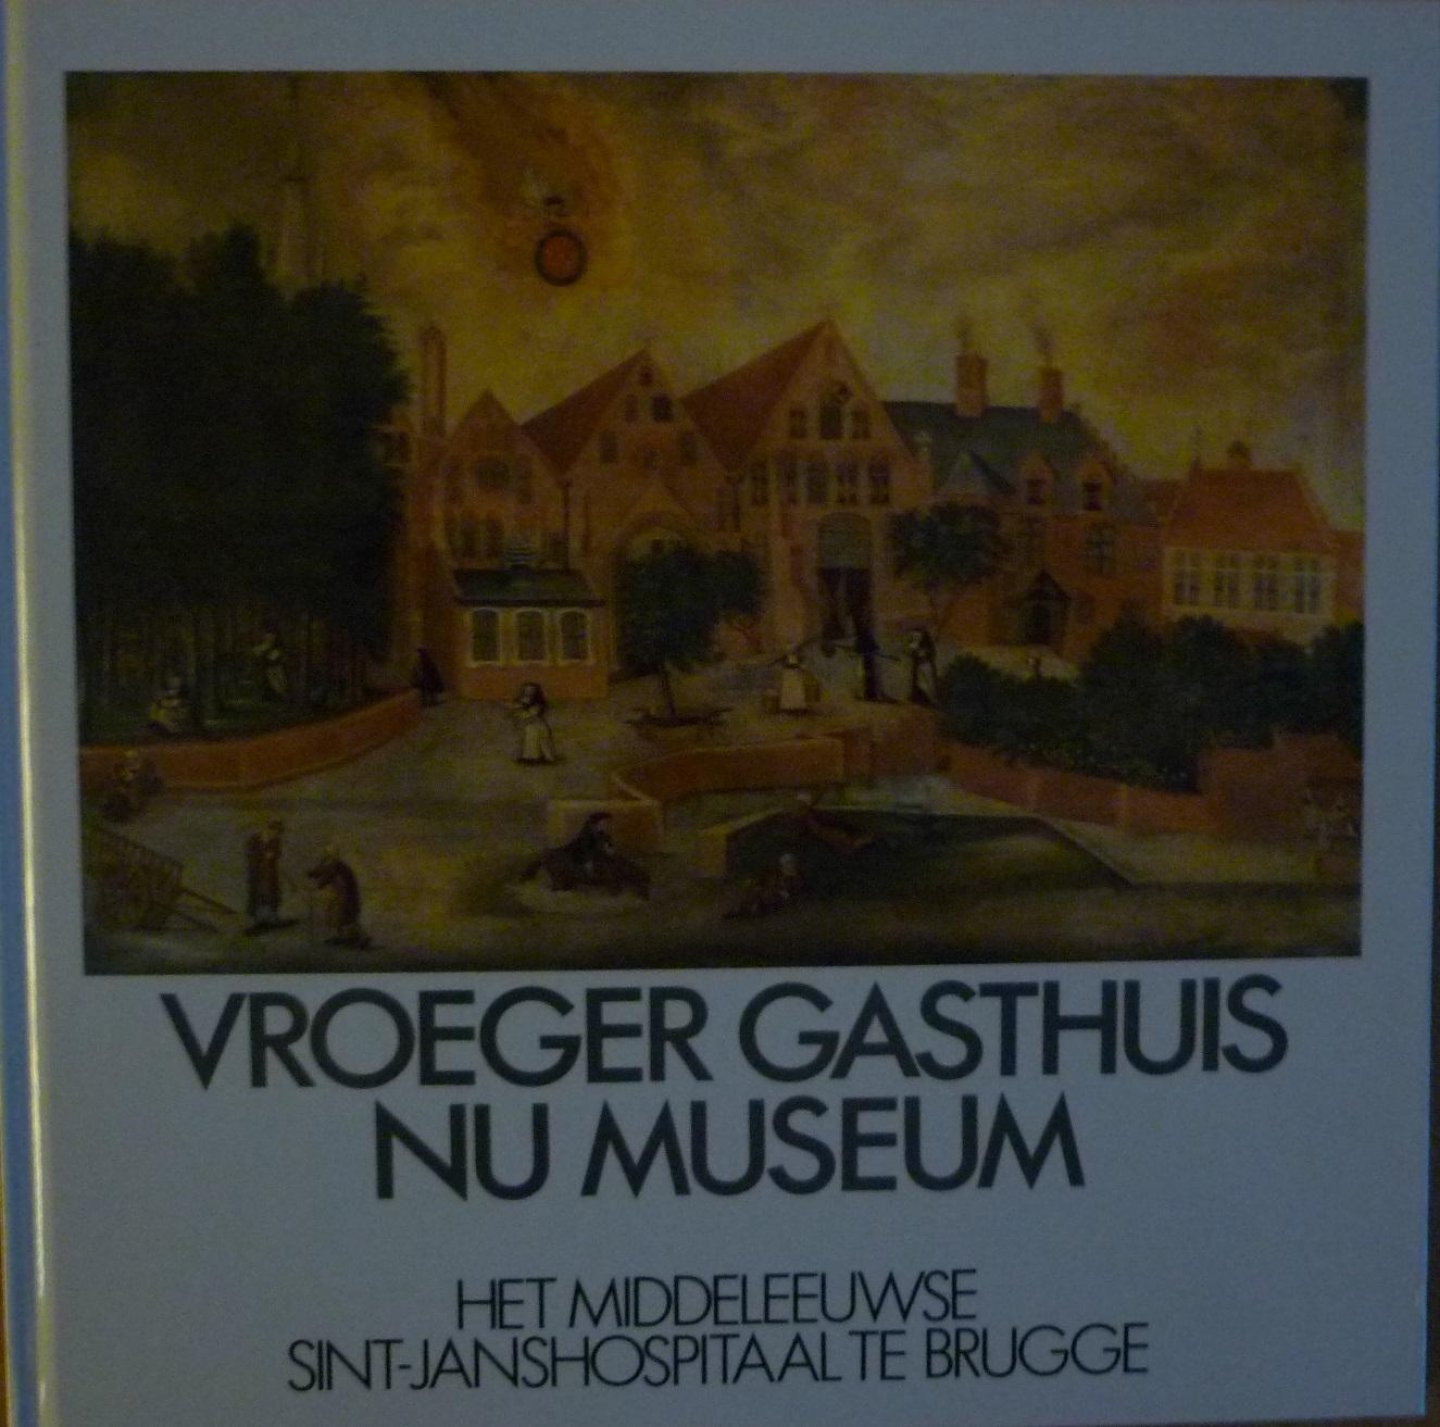 Lobelle, Hilde - Vroeger gasthuis nu museum  Het middeleeuwse Sint-Janshospitaal te Brugge